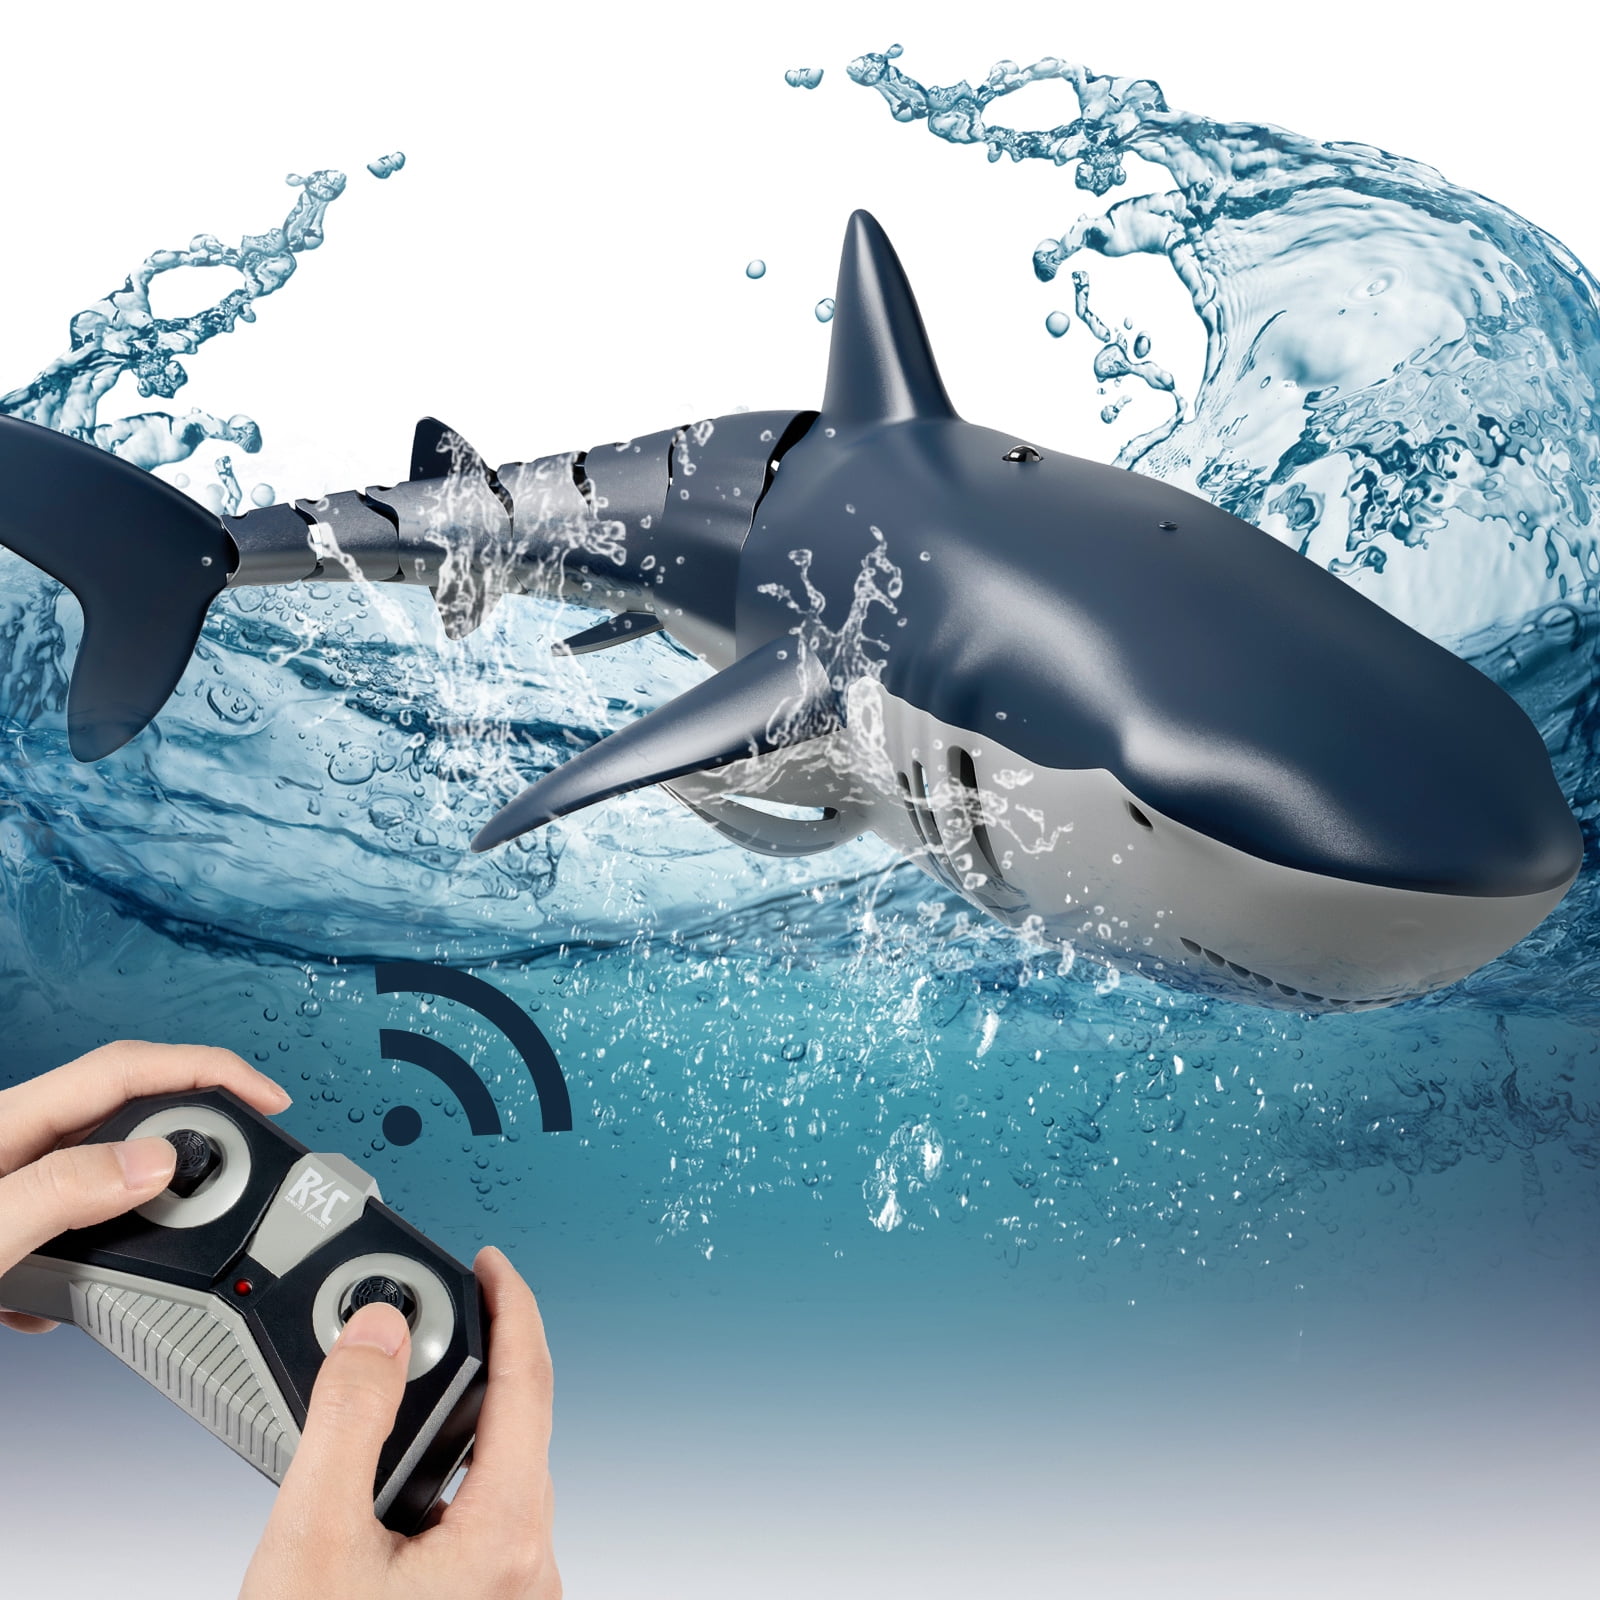 2.4g Remote Control Shark Toy High Simulation Shark Shark For